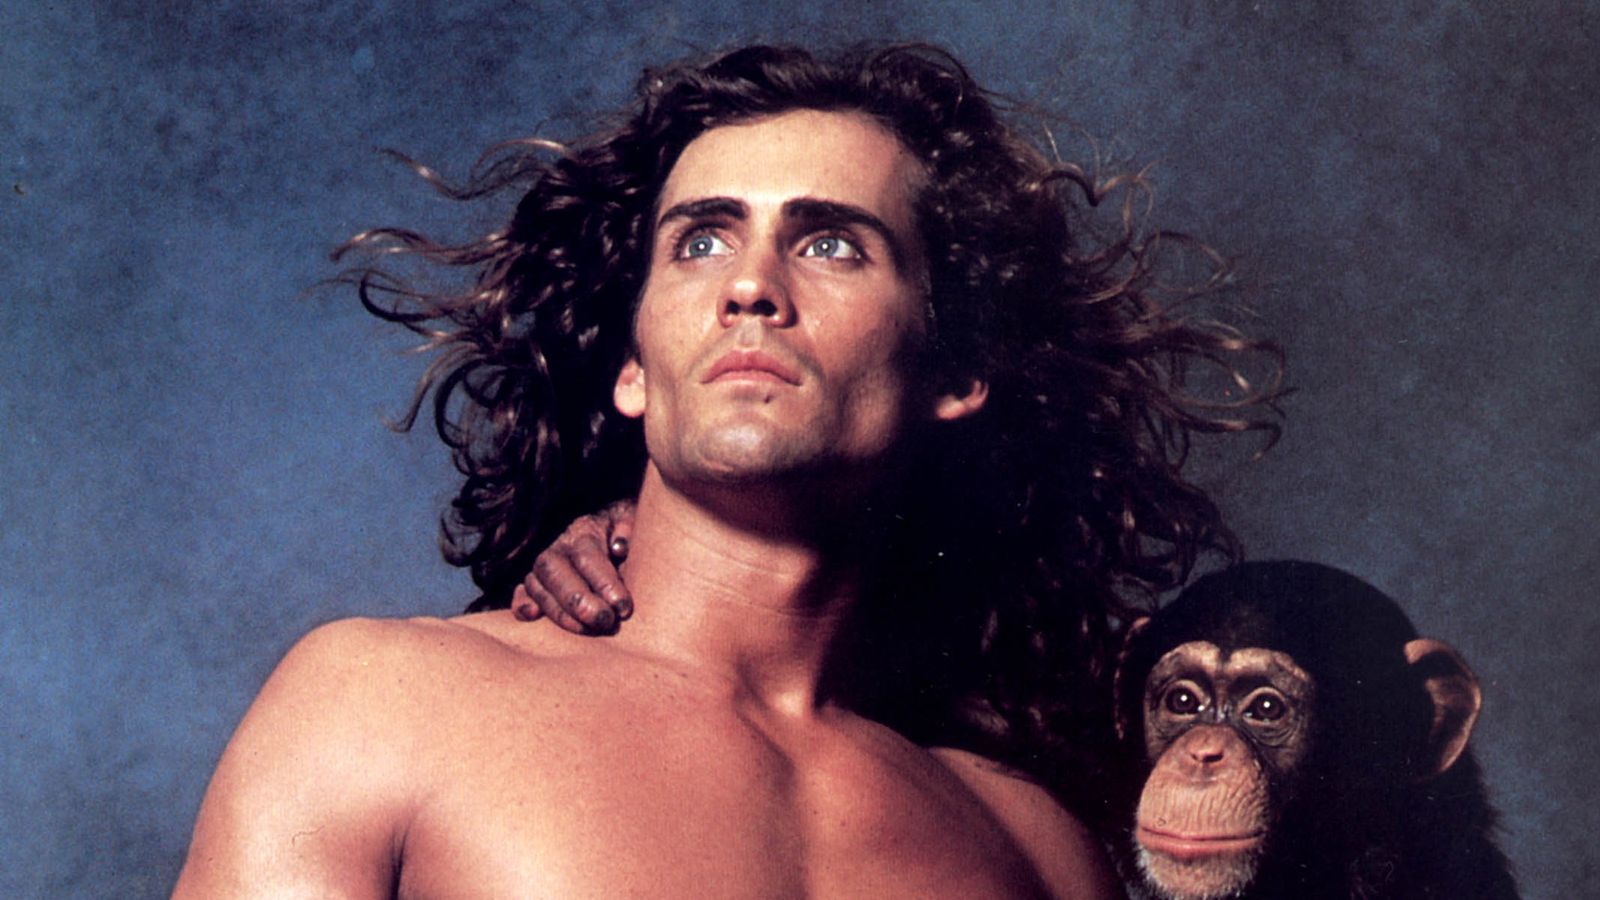 Tarzan star Joe Lara dies aged 58 in Tennessee plane crash